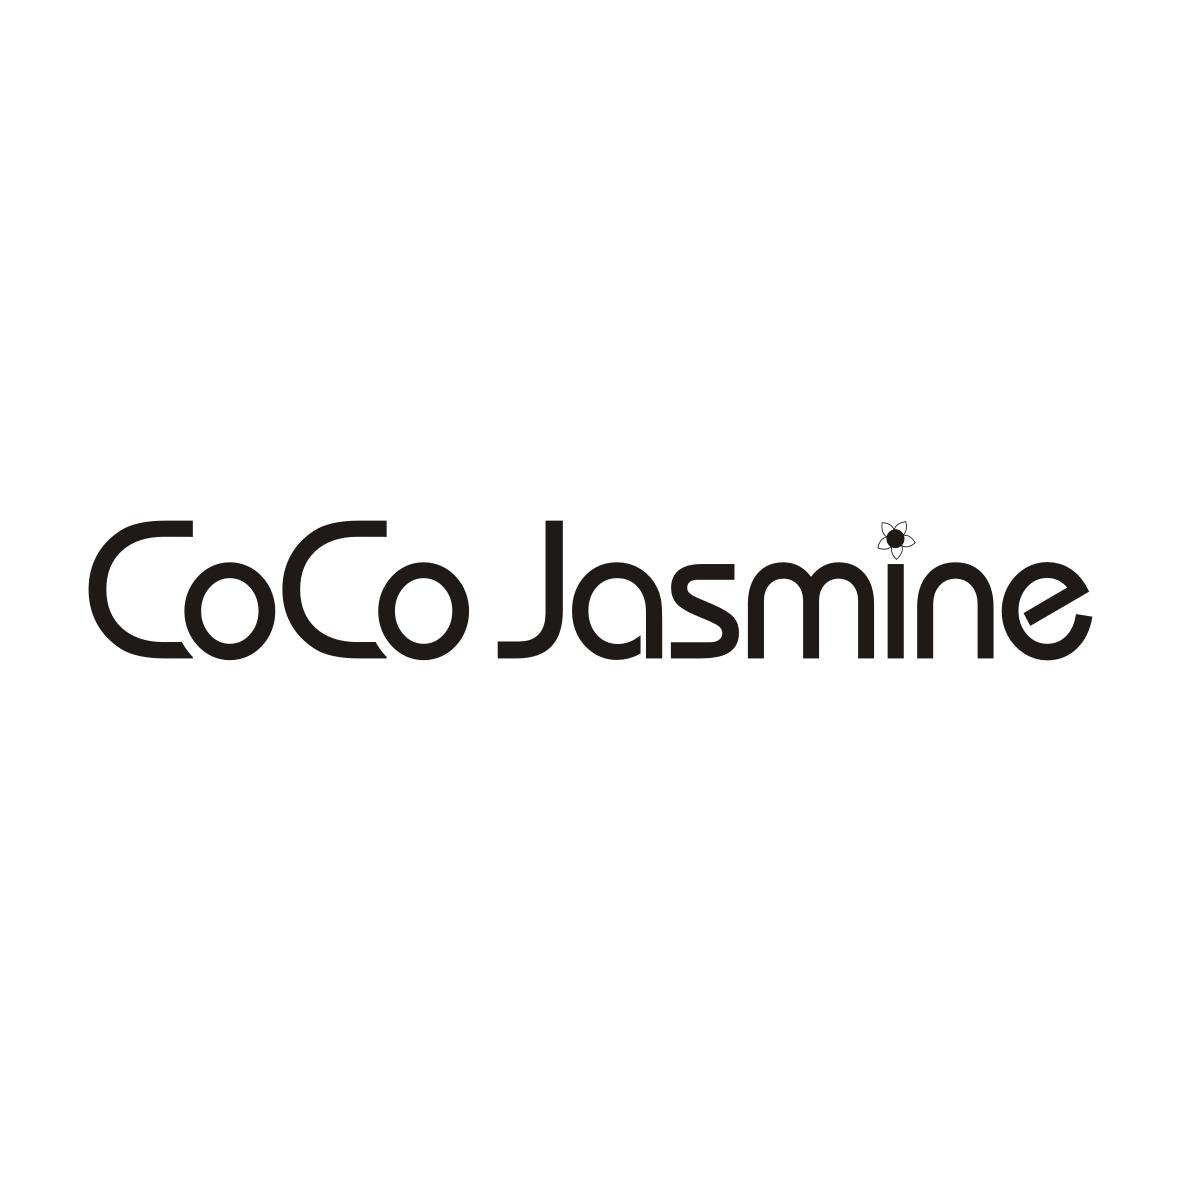 43类-餐饮住宿COCO JASMINE商标转让